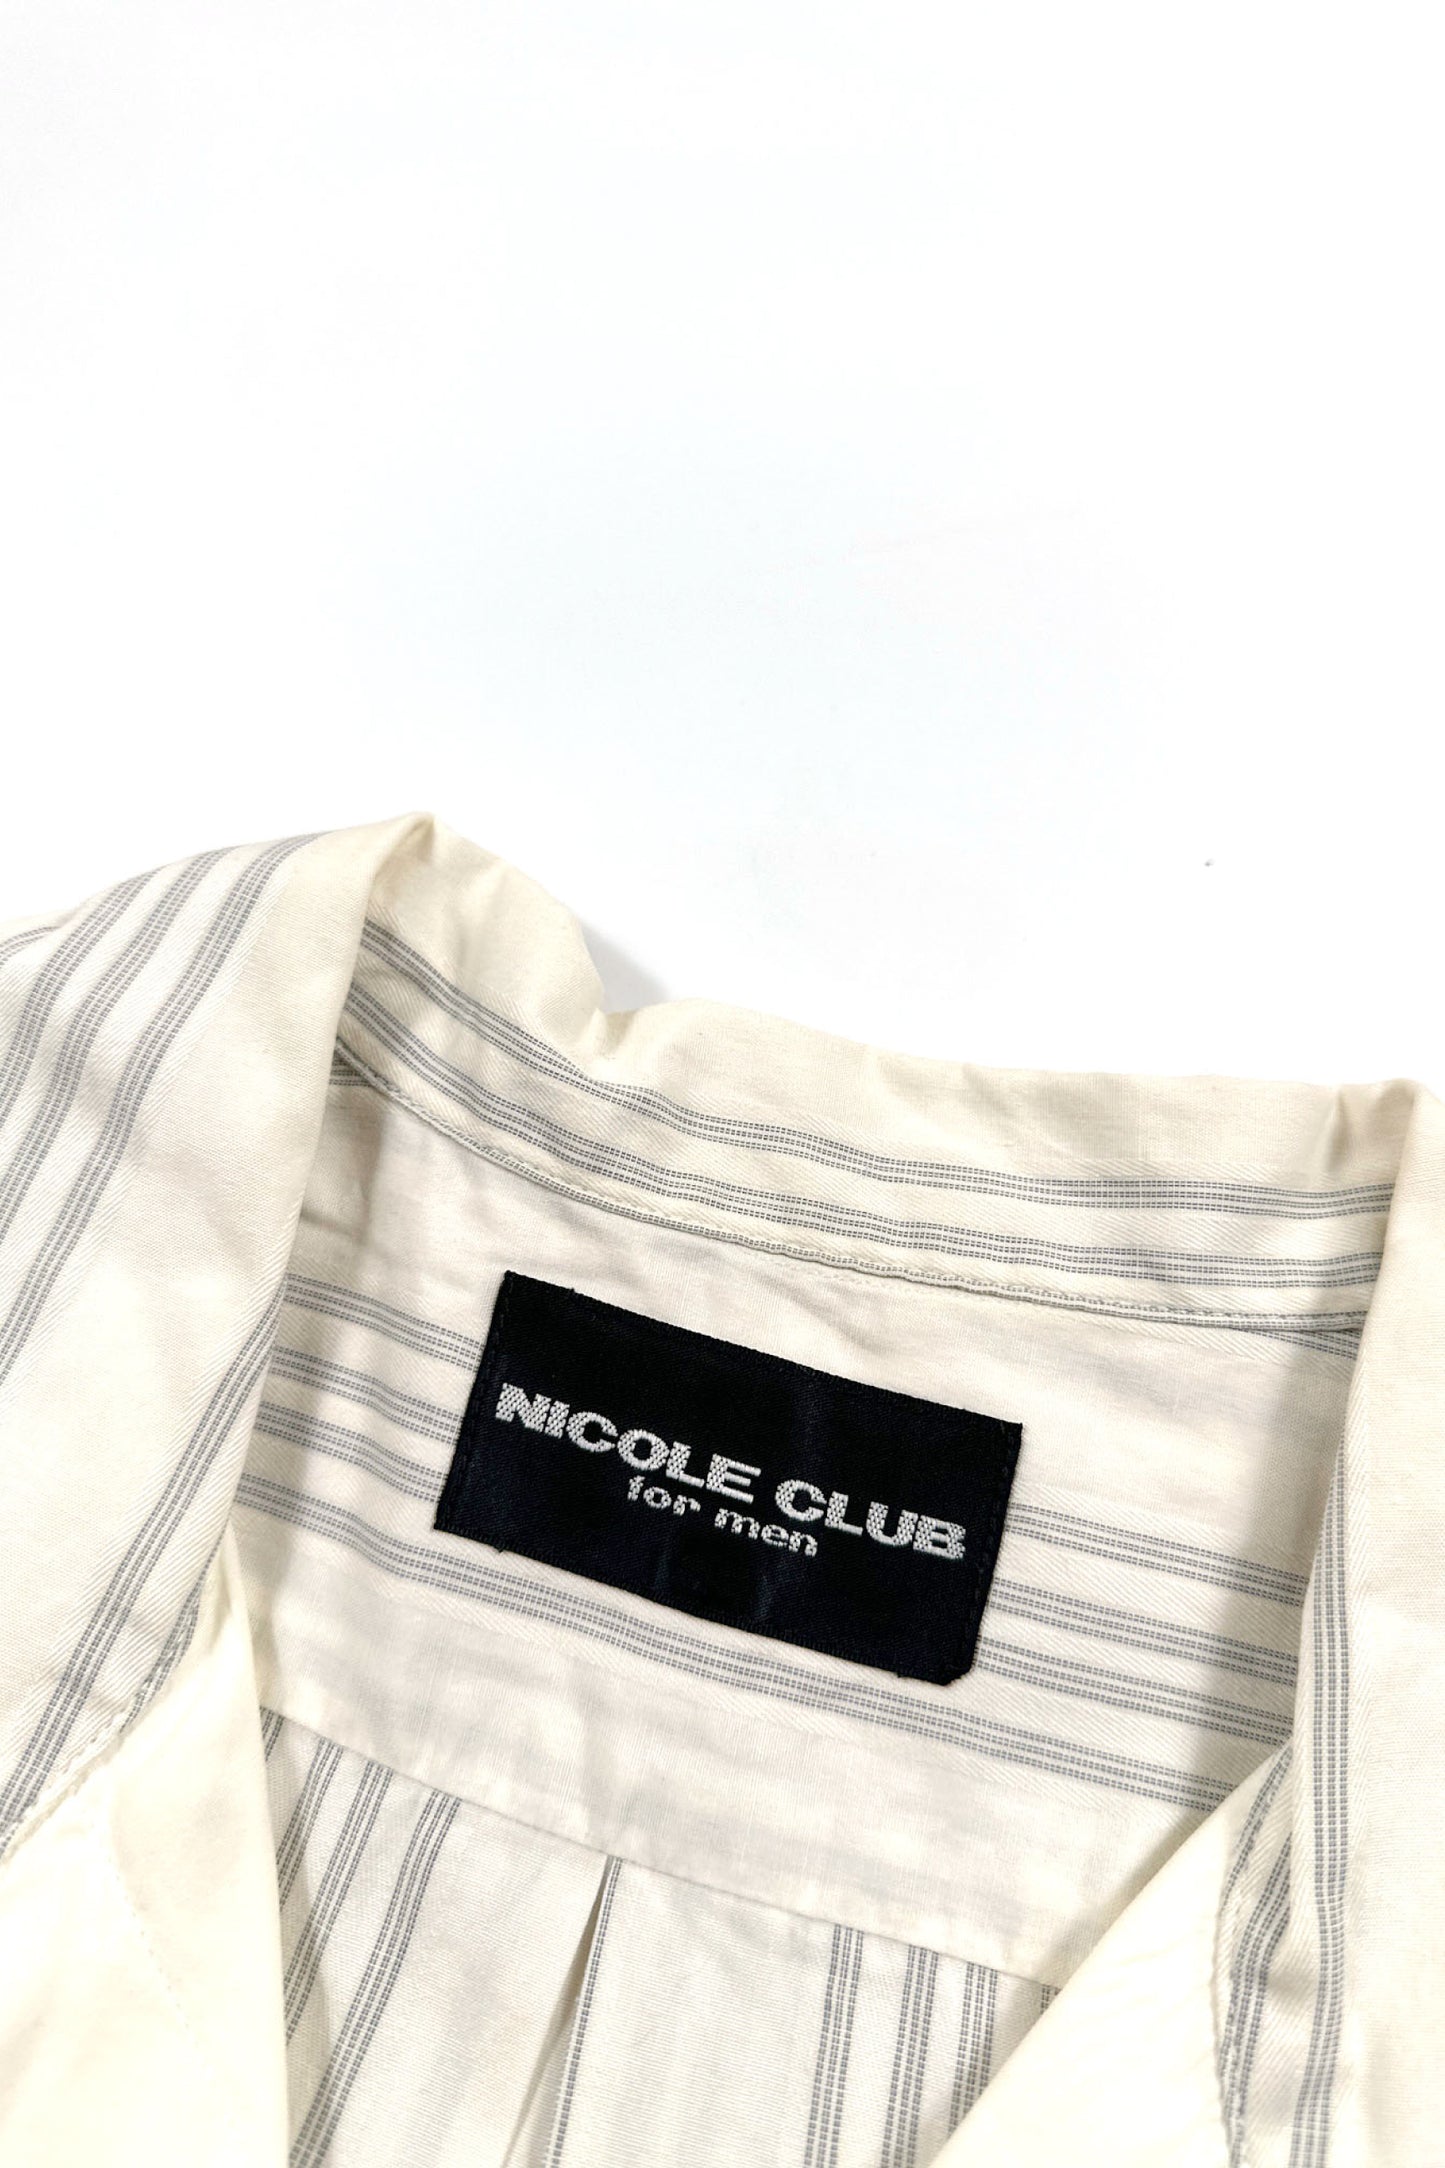 90's NICOLE CLUB stripe open collar shirt